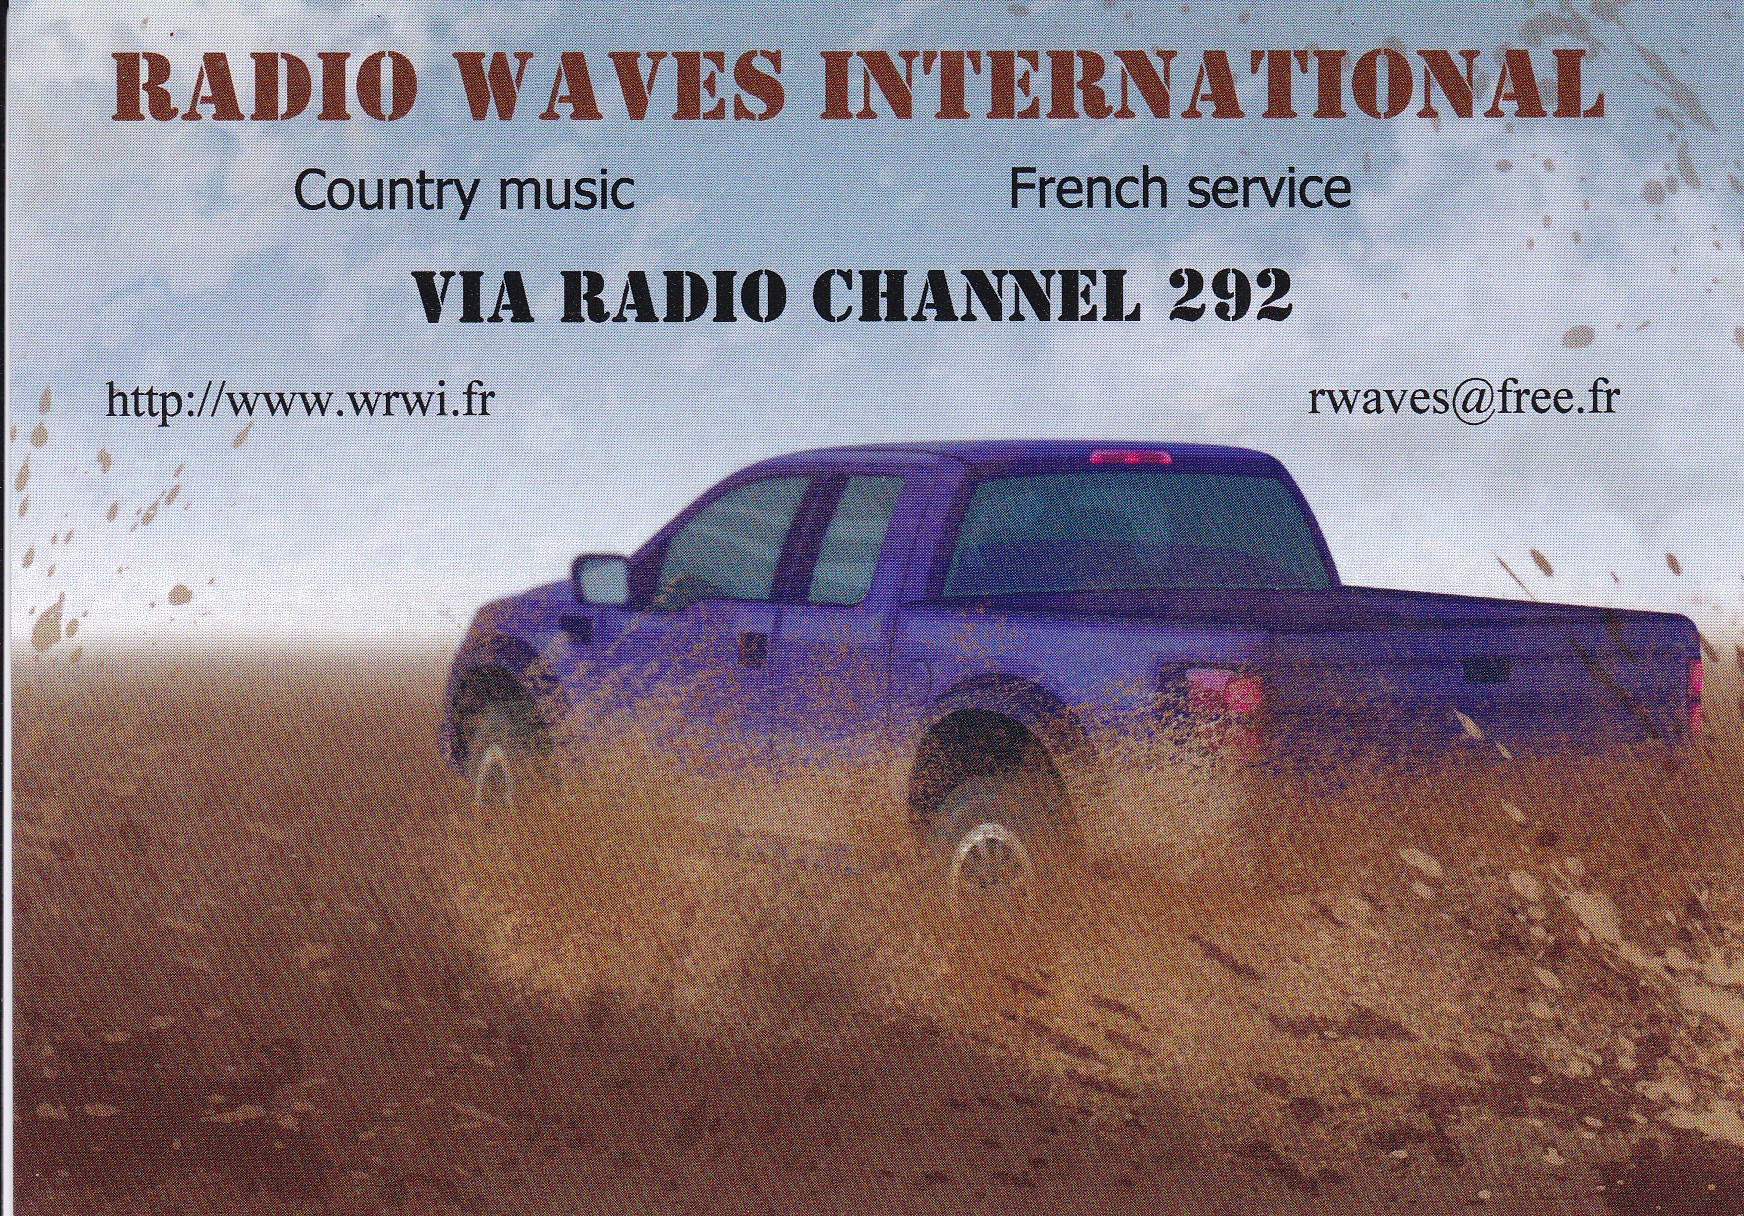 RADIO WAVES INTERNATIONAL